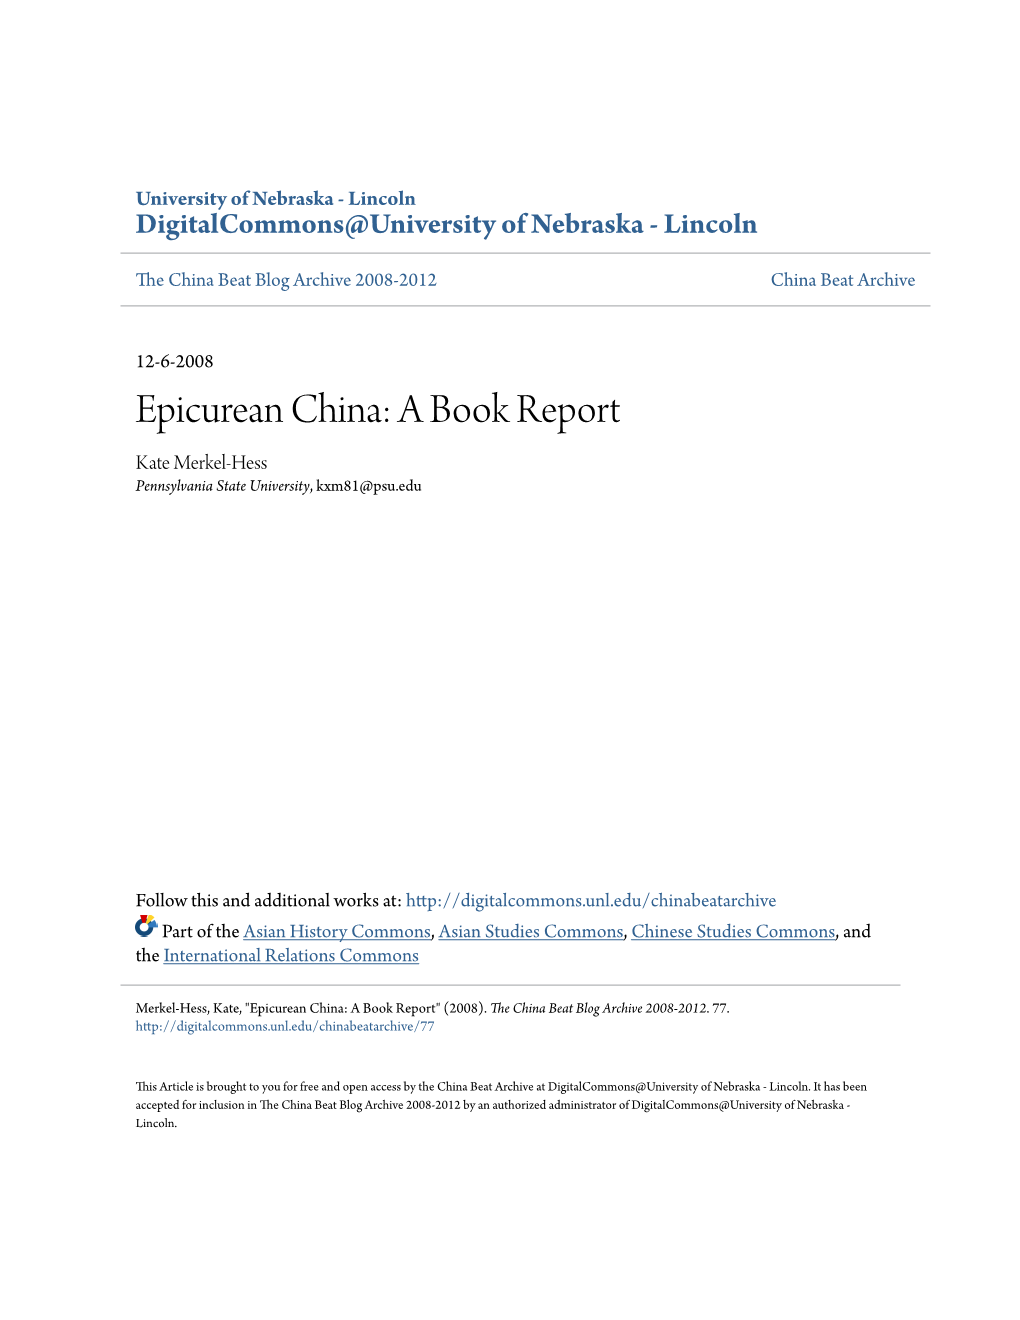 Epicurean China: a Book Report Kate Merkel-Hess Pennsylvania State University, Kxm81@Psu.Edu